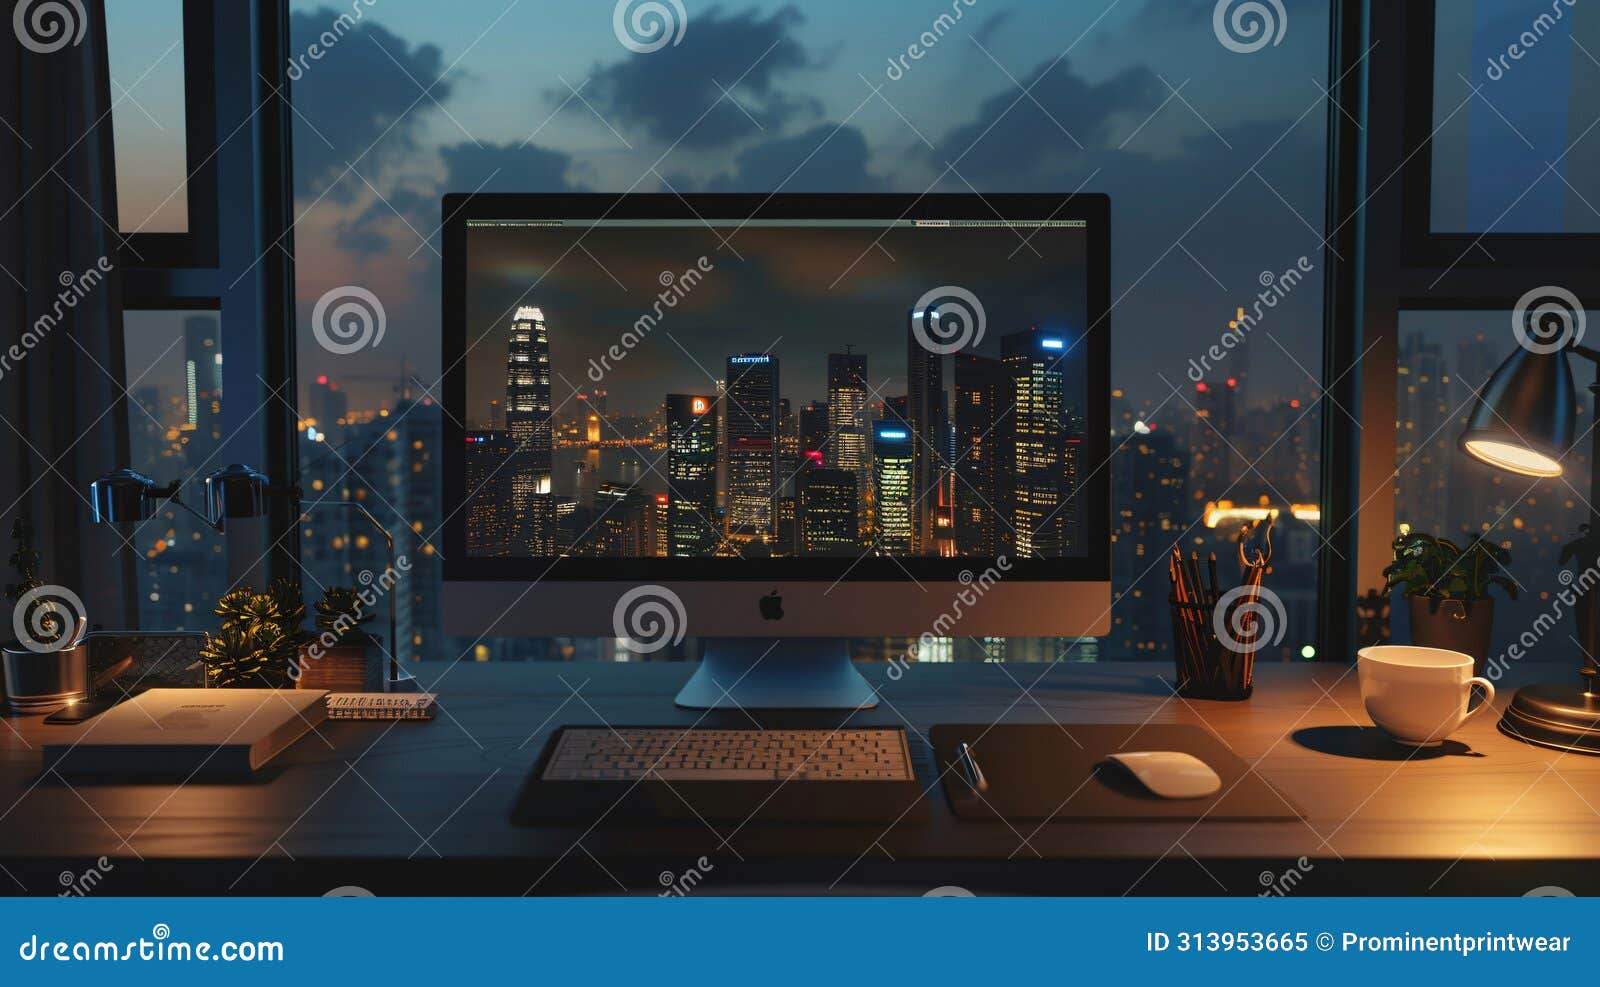 modern home office setup with imac, night time, city skyline on the screen